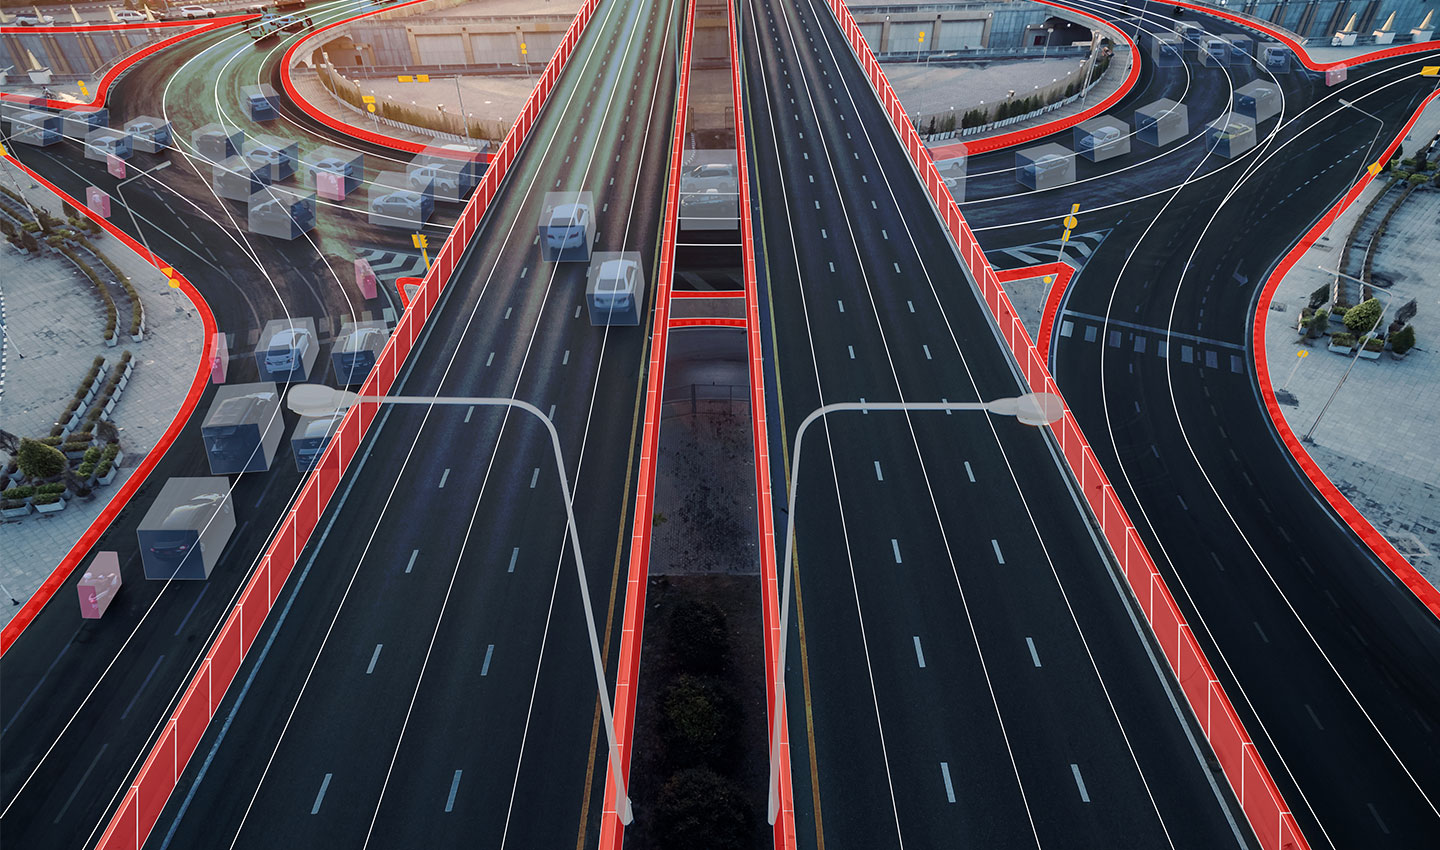 The TomTom HD Map makes autonomous driving safer